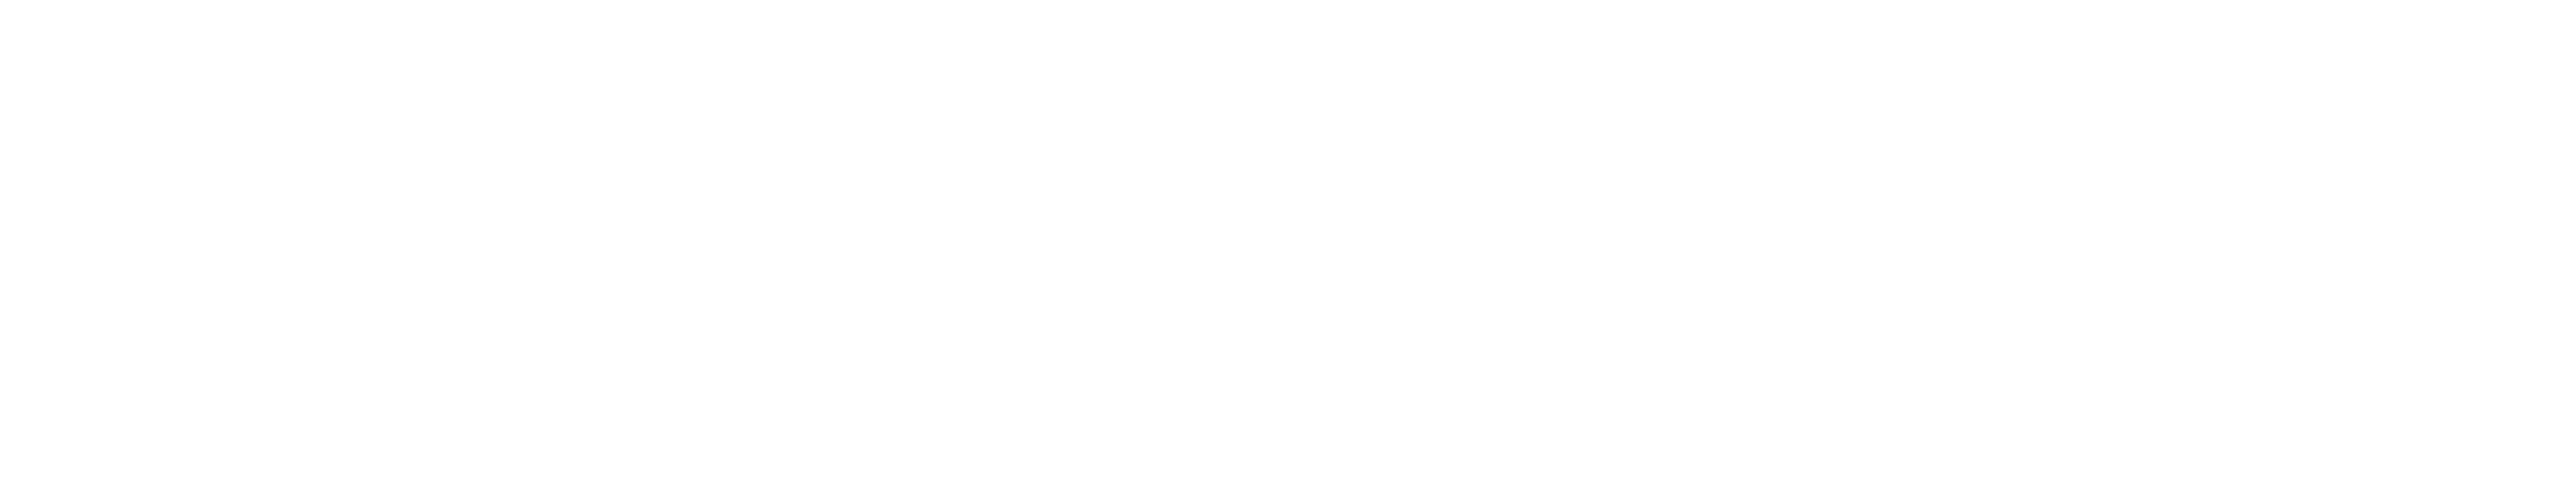 EventX_logo_all_white